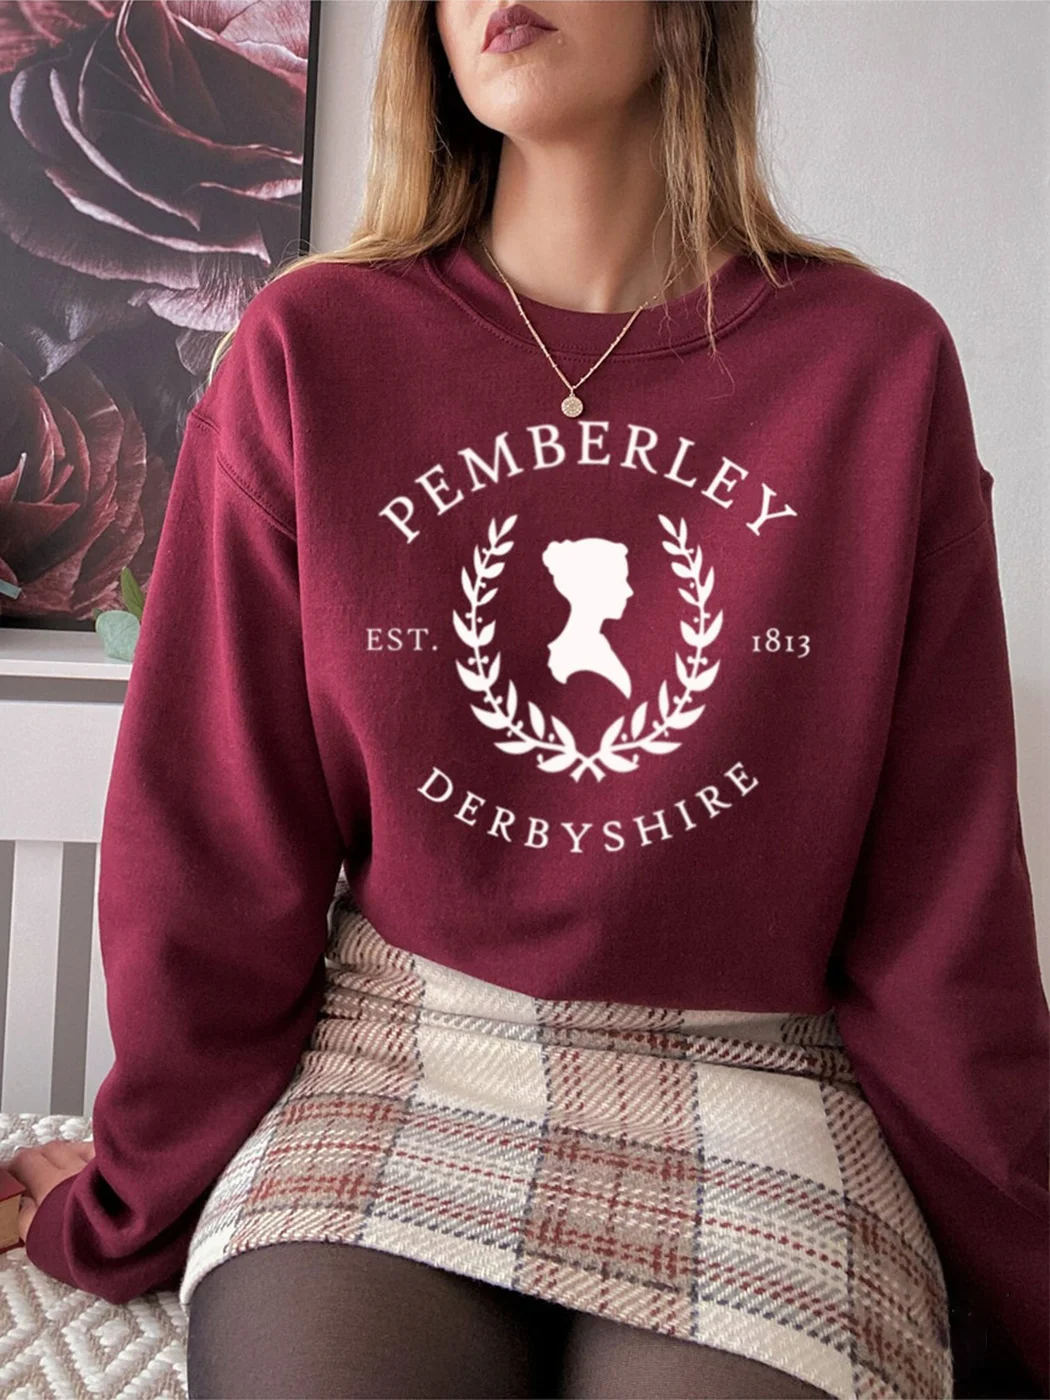 Pemberley Sweatshirt, Pride And Prejudice Shirt / DarkAcademias /Darkacademias